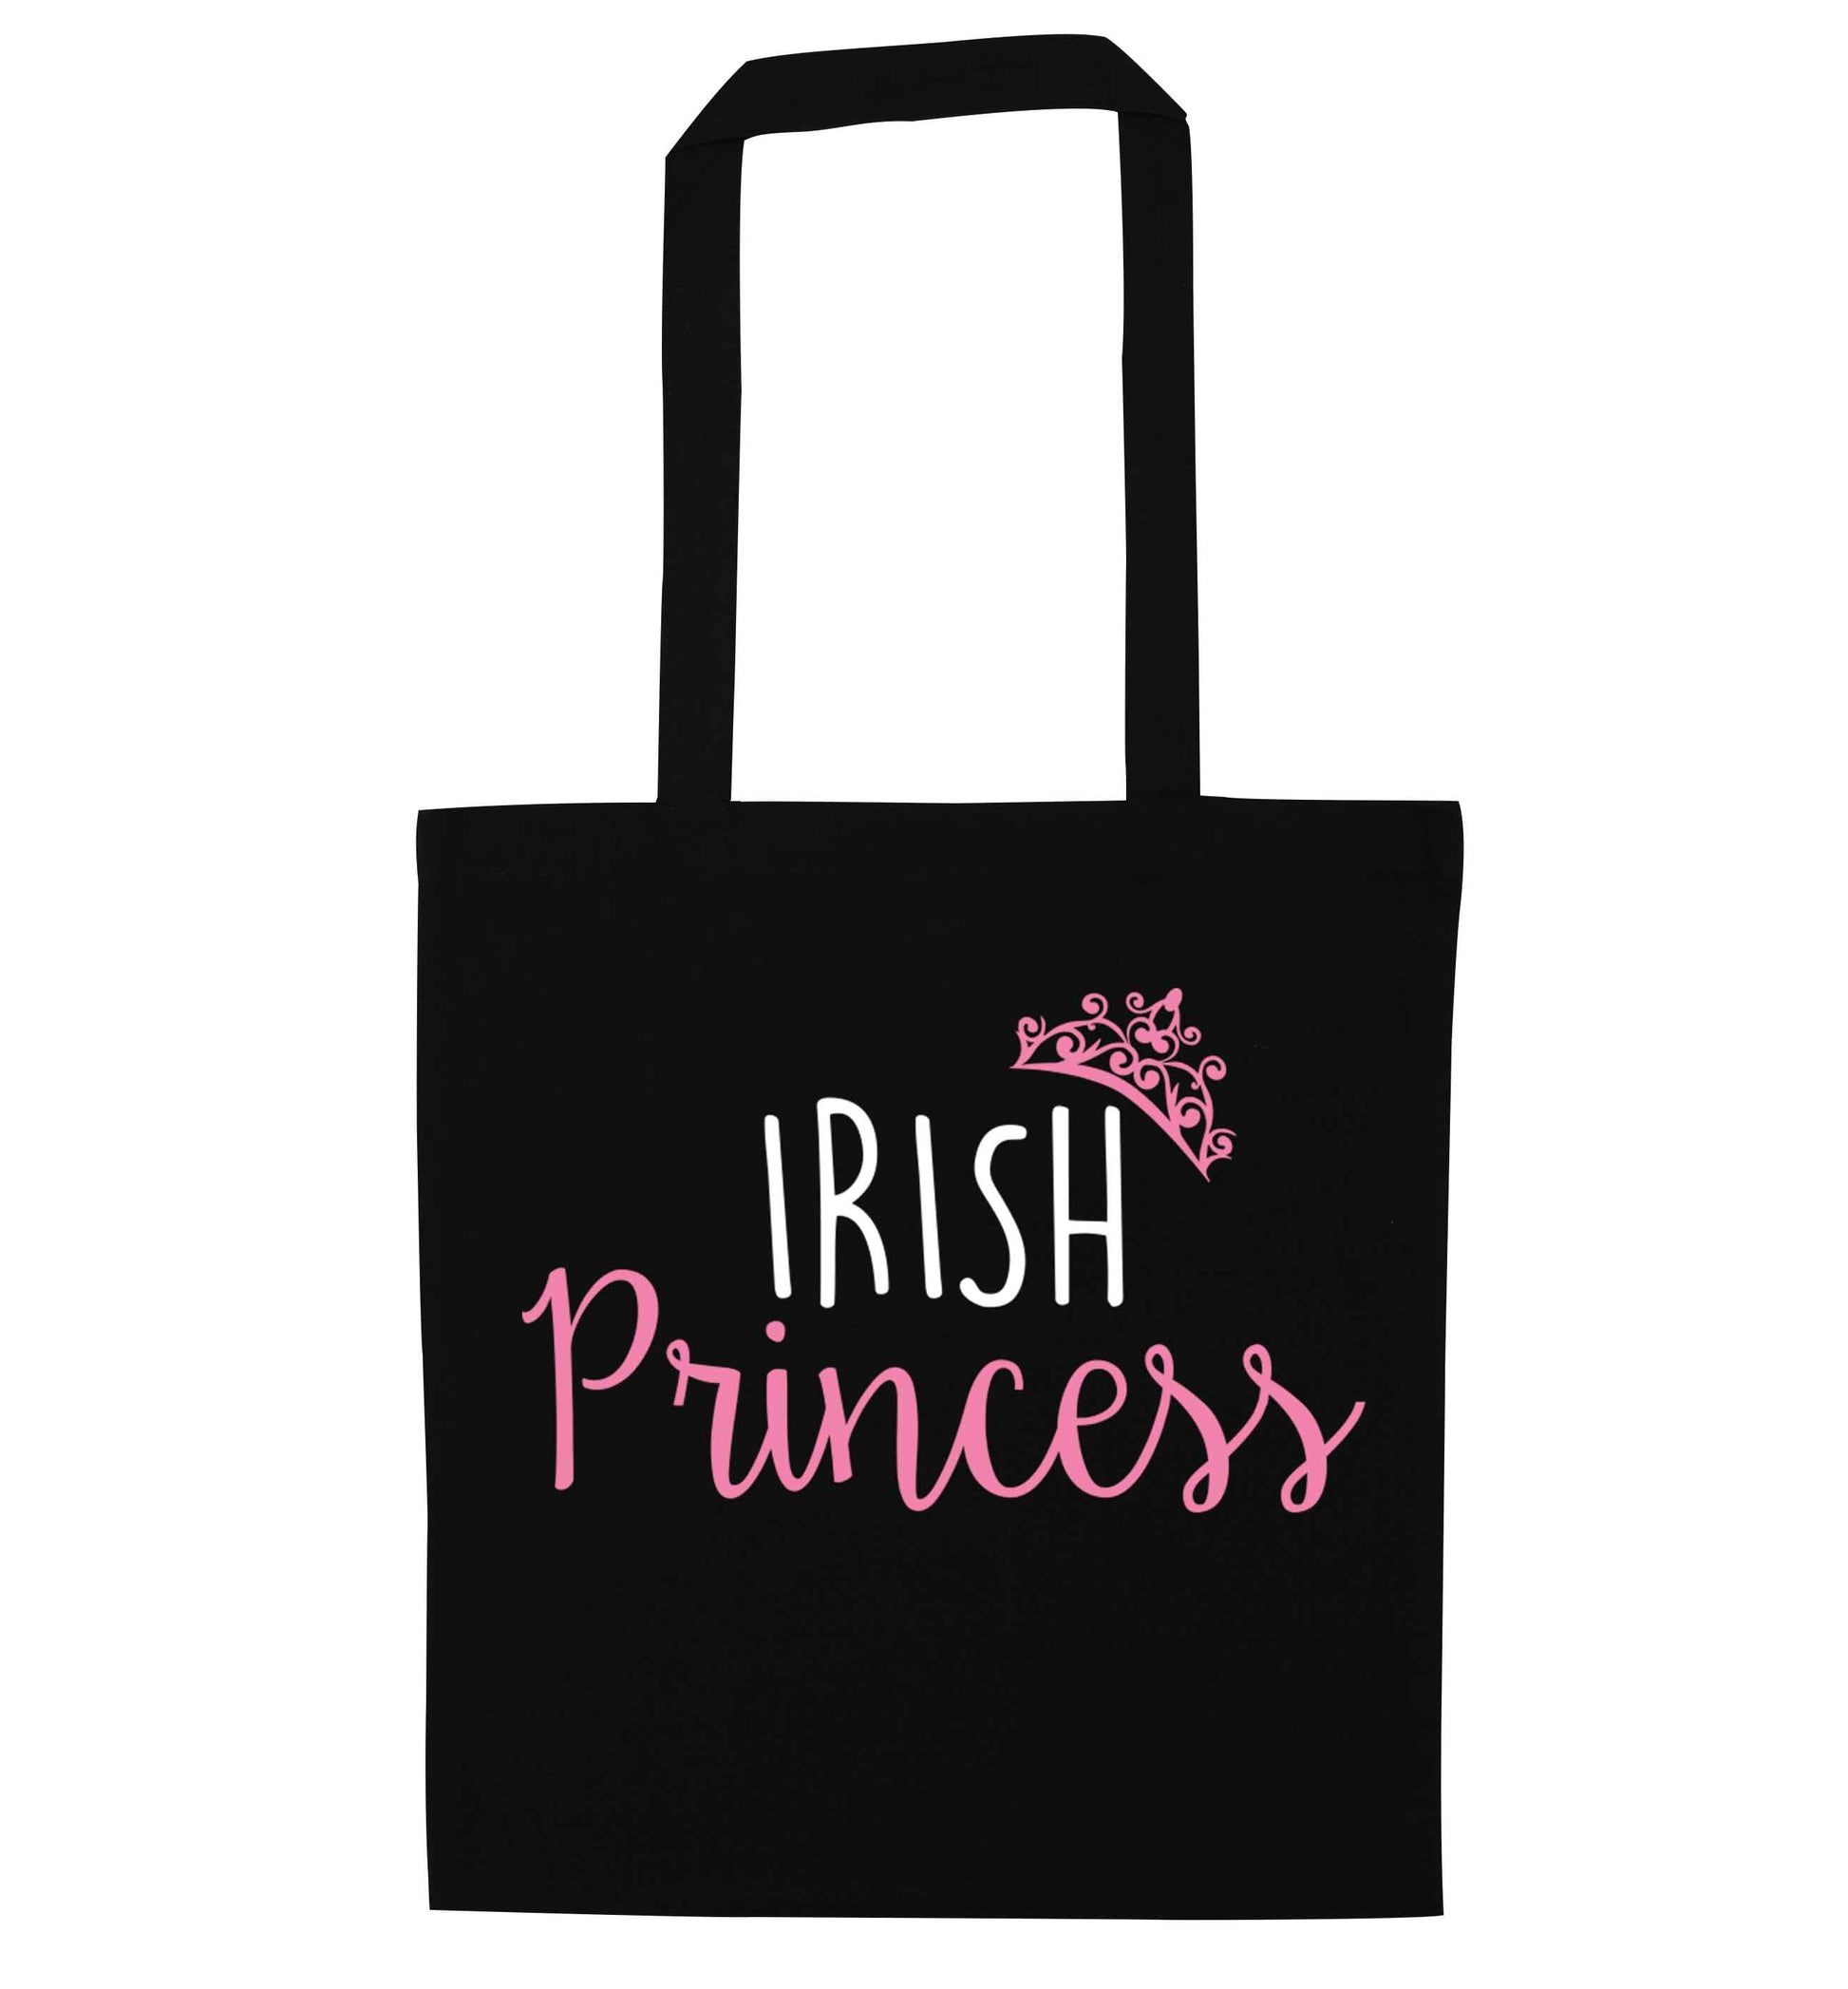 Irish princess black tote bag